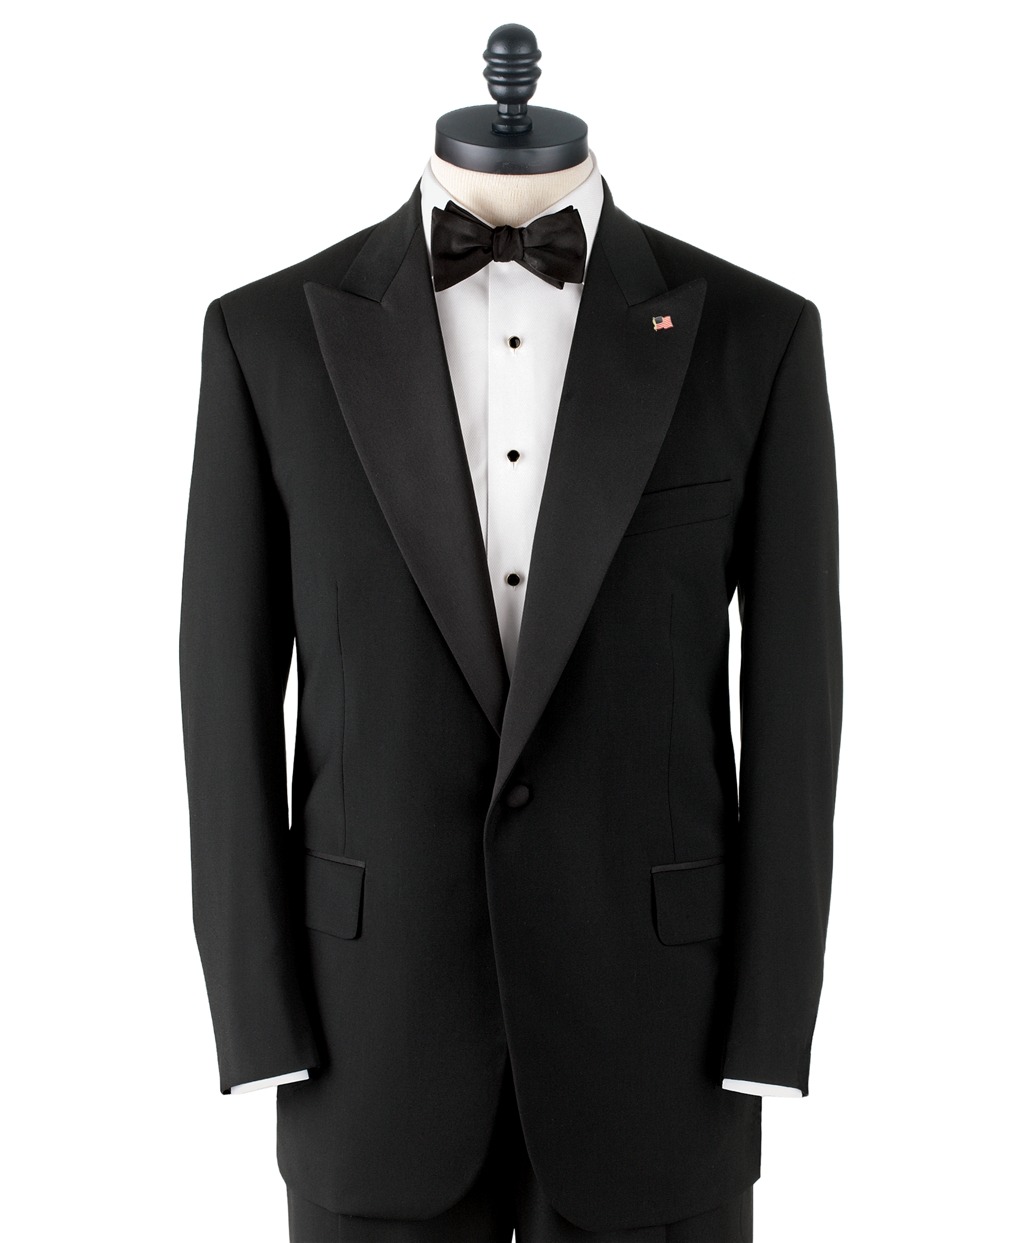 Q & Answer: Where Should I Buy A Tuxedo?